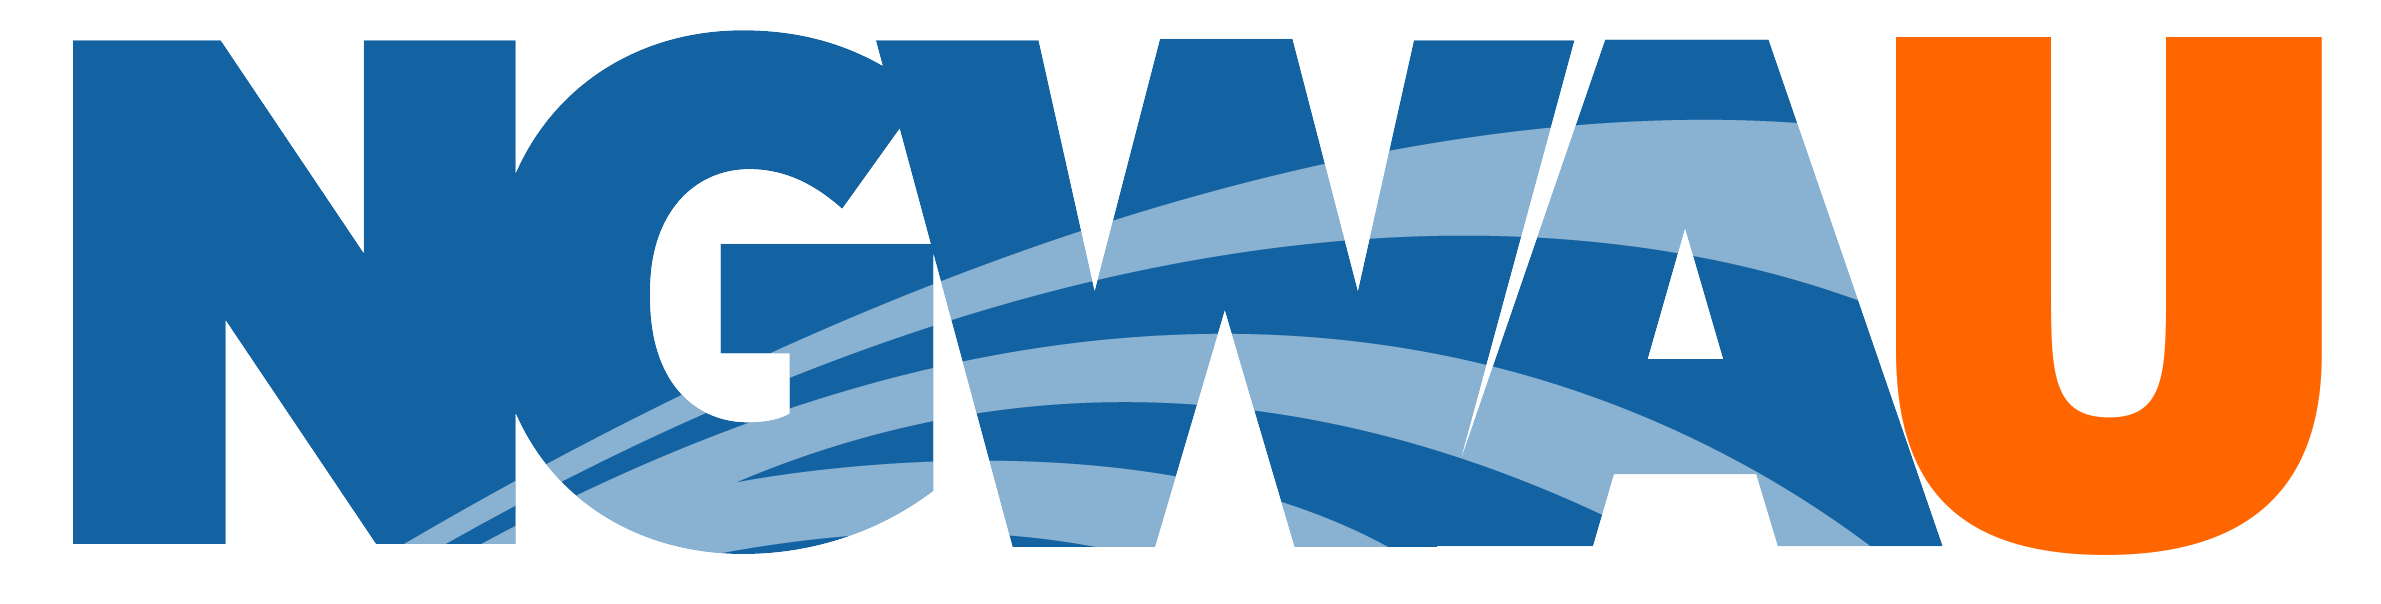 NGWAU logo